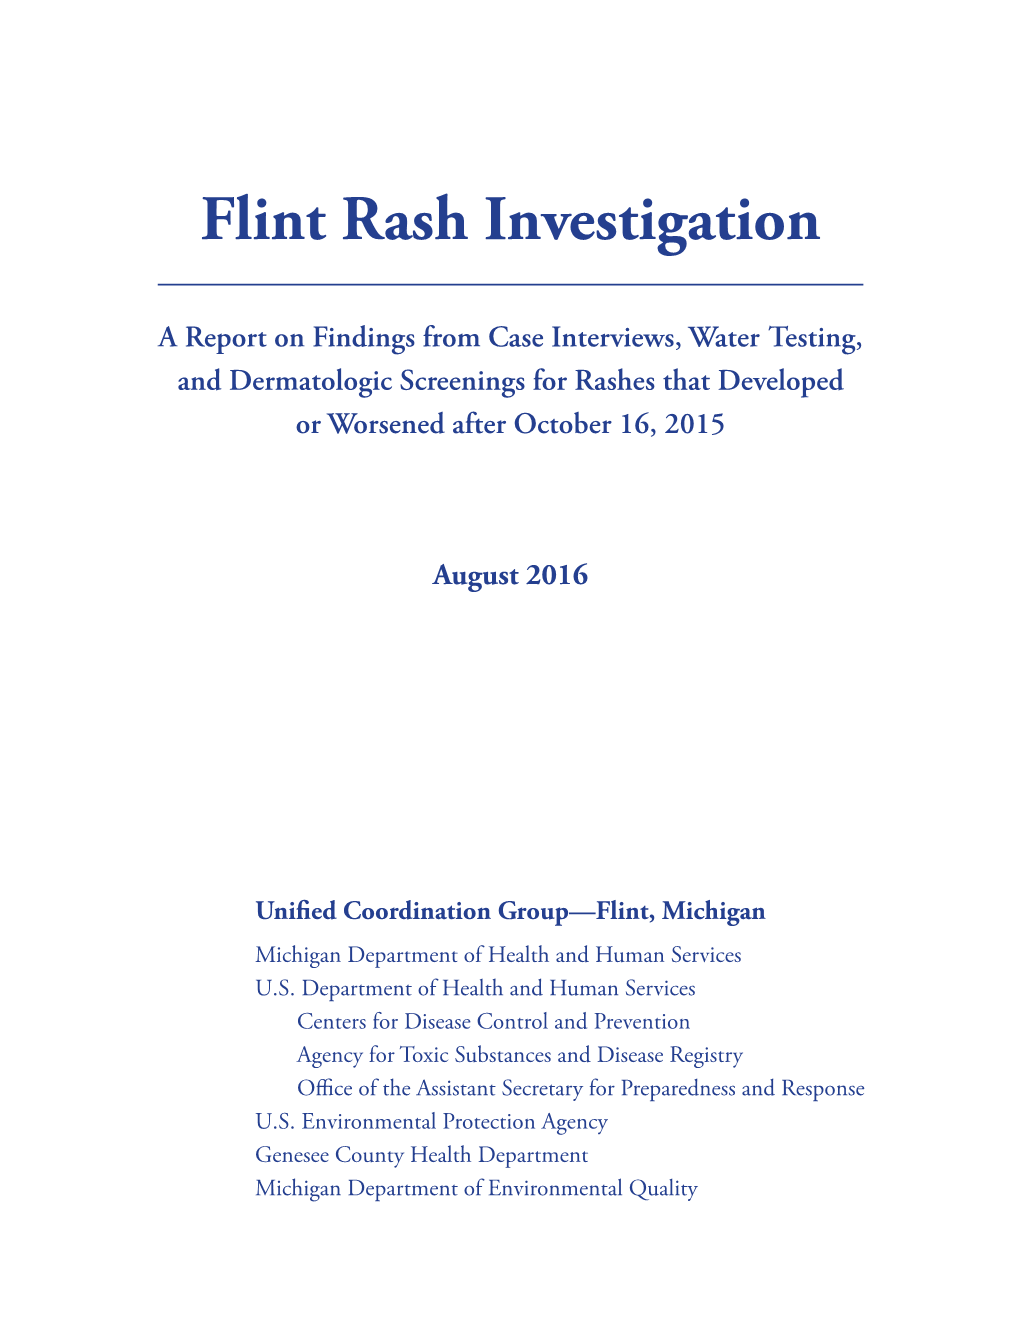 Flint Rash Investigation Report